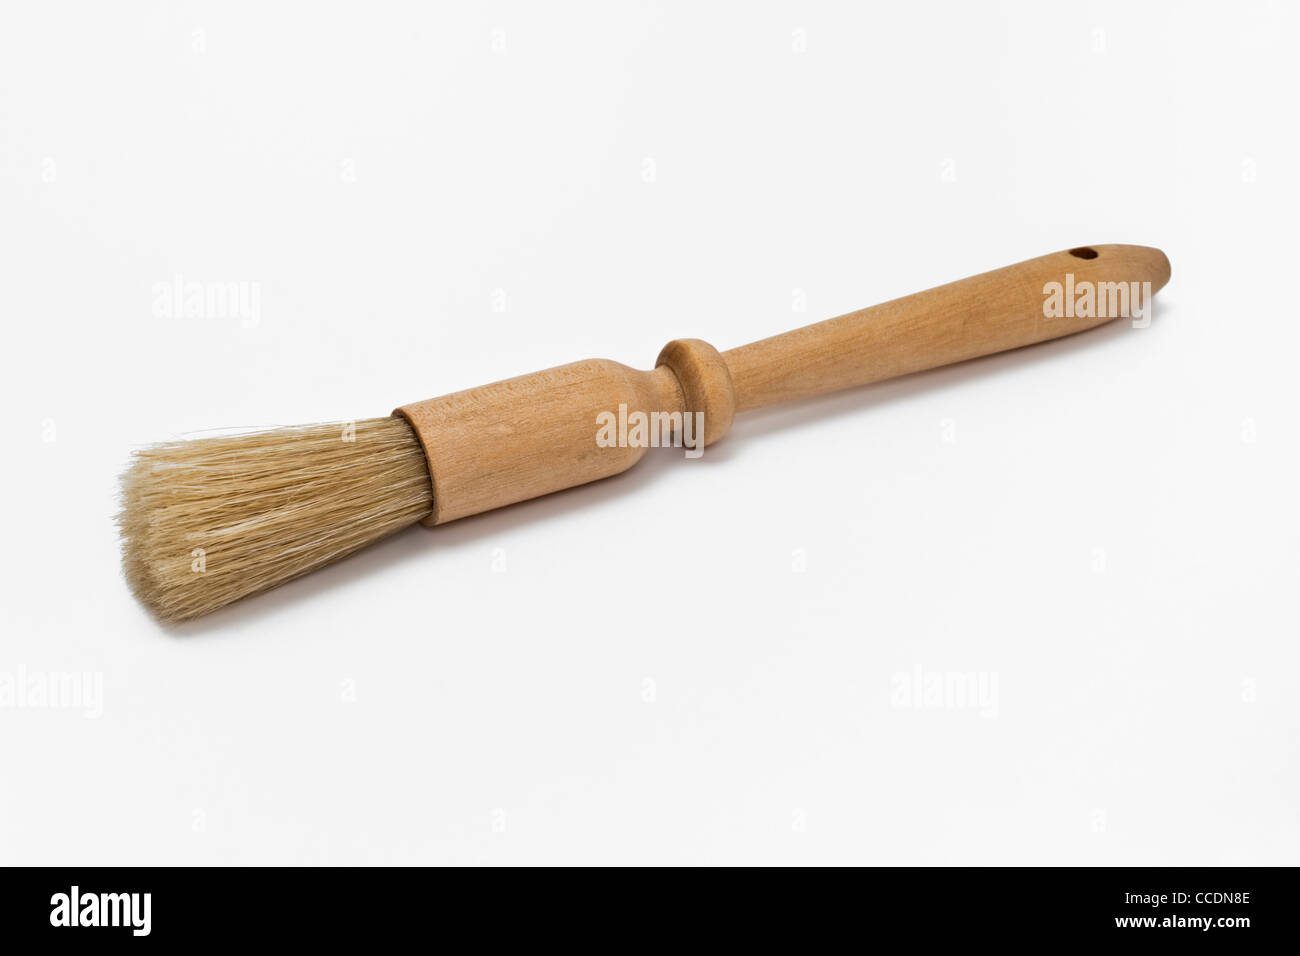 Detailansicht eines Backpinsels | Dettaglio foto di una spazzola panettieri Foto Stock